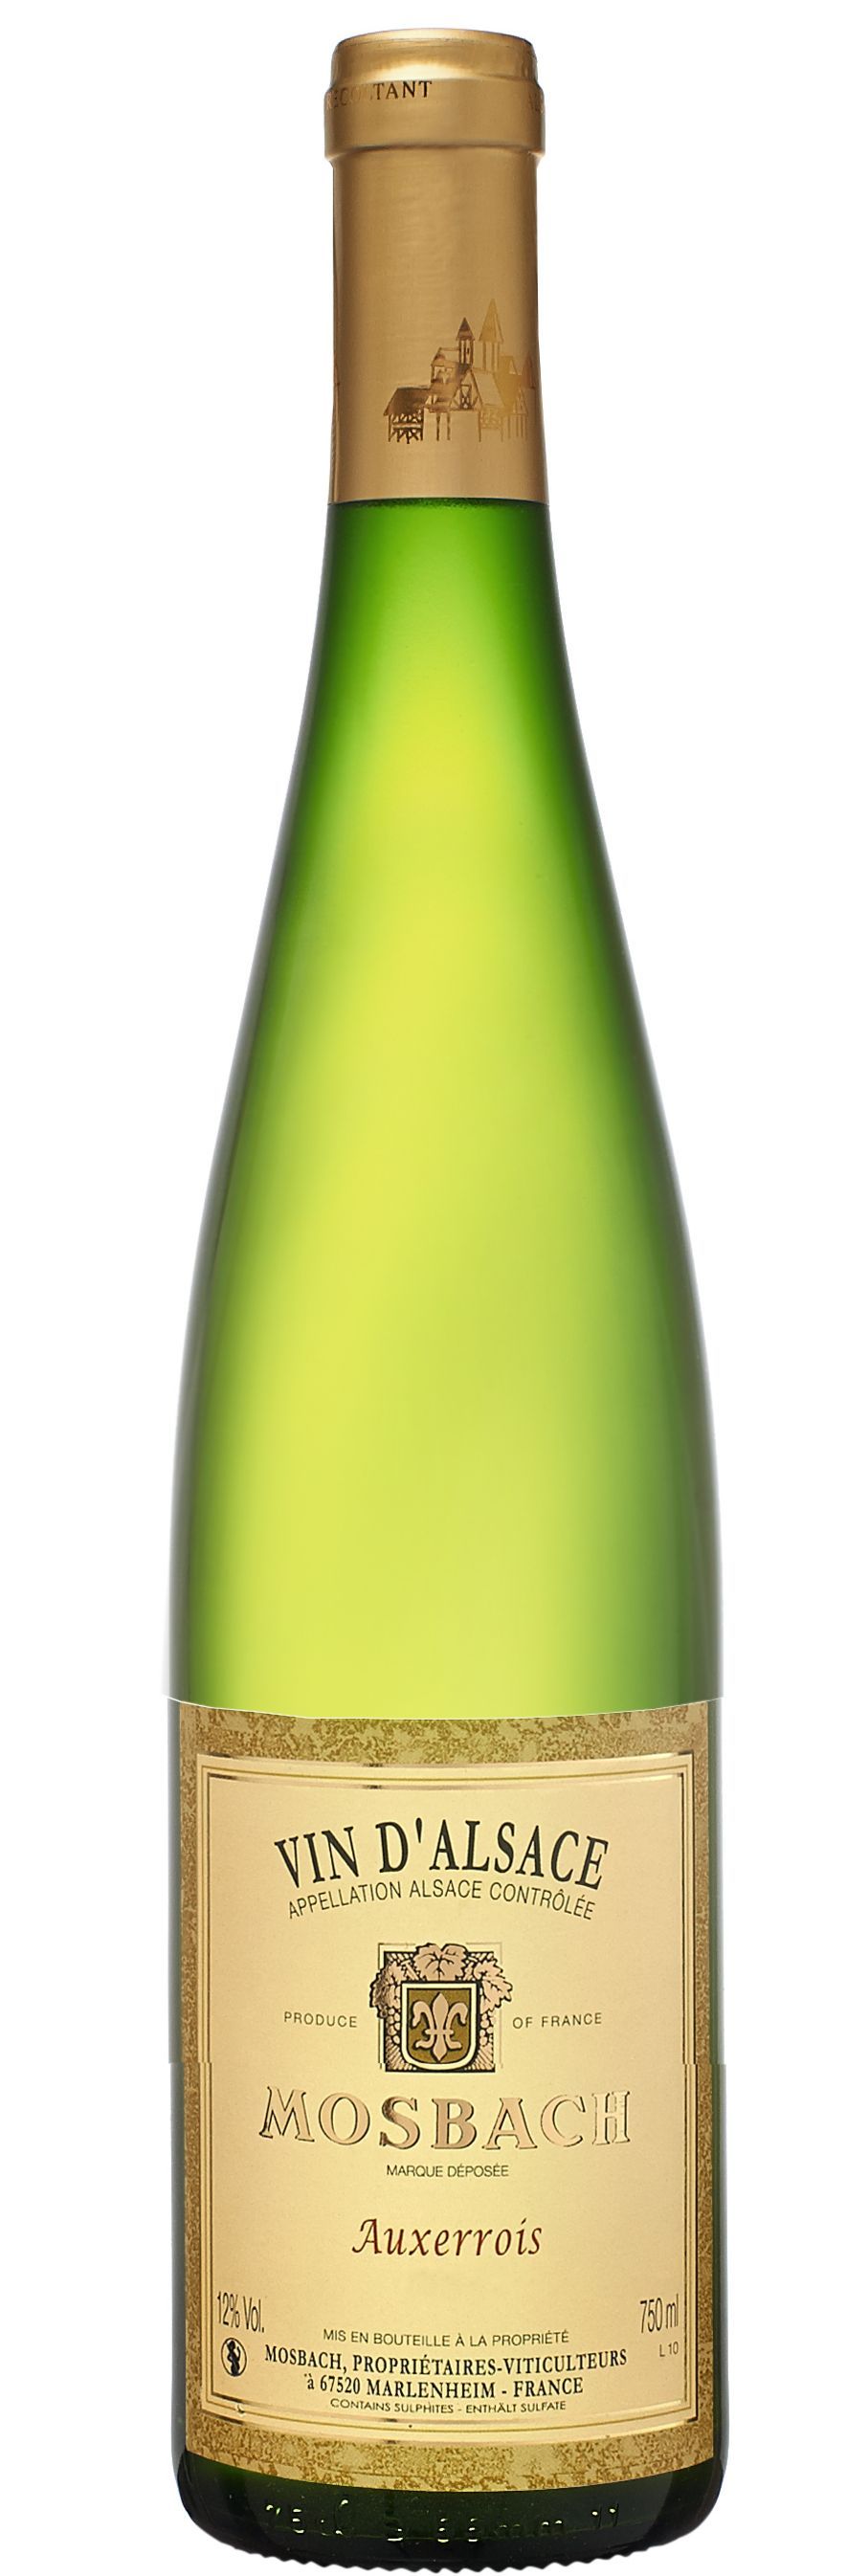 EARL MOSBACH (MARLENHEIM) Auxerrois Mosbach, Weiß, 2018, Alsace ou Vin d'Alsace. Bottle image